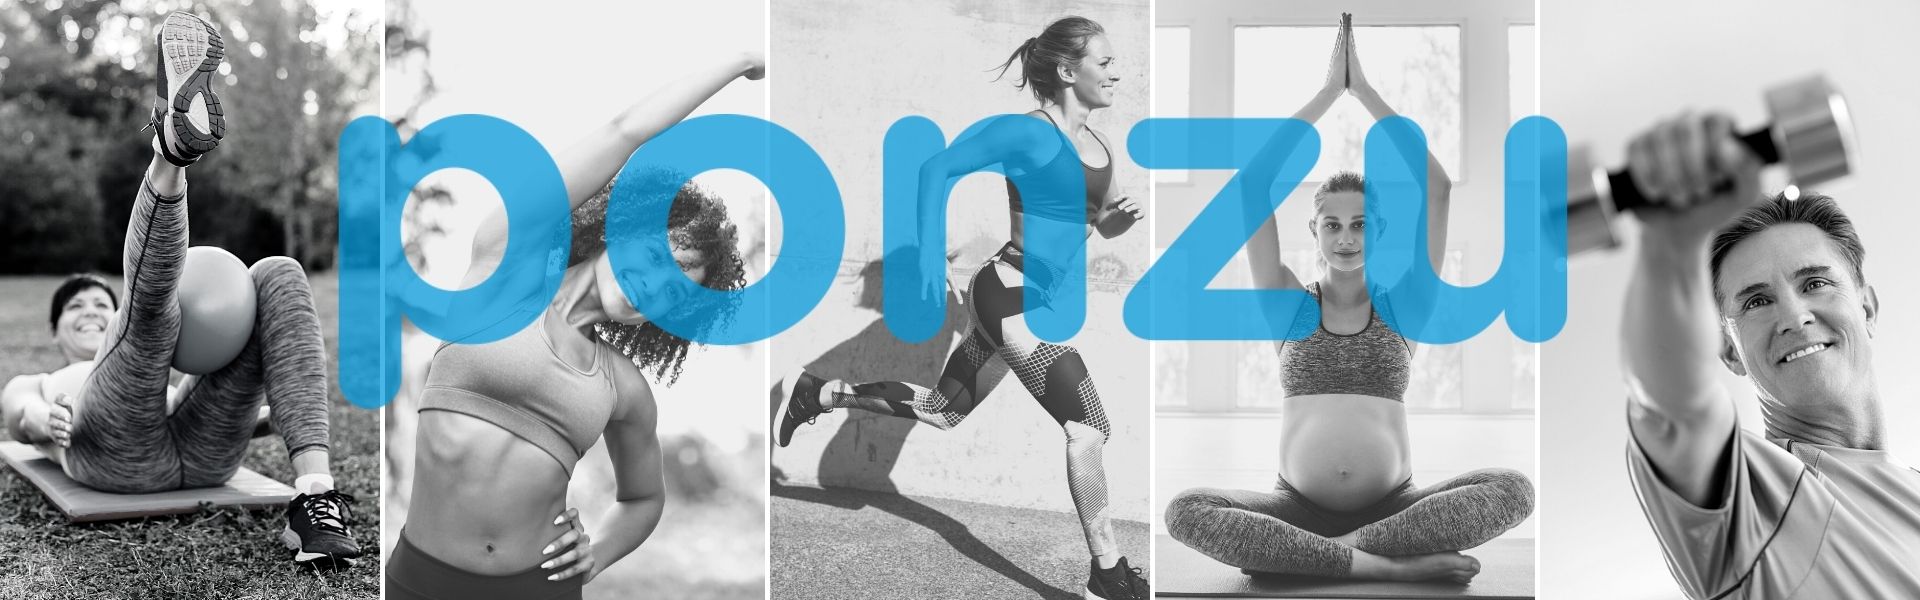 New platform ponzu puts fun back into fitness